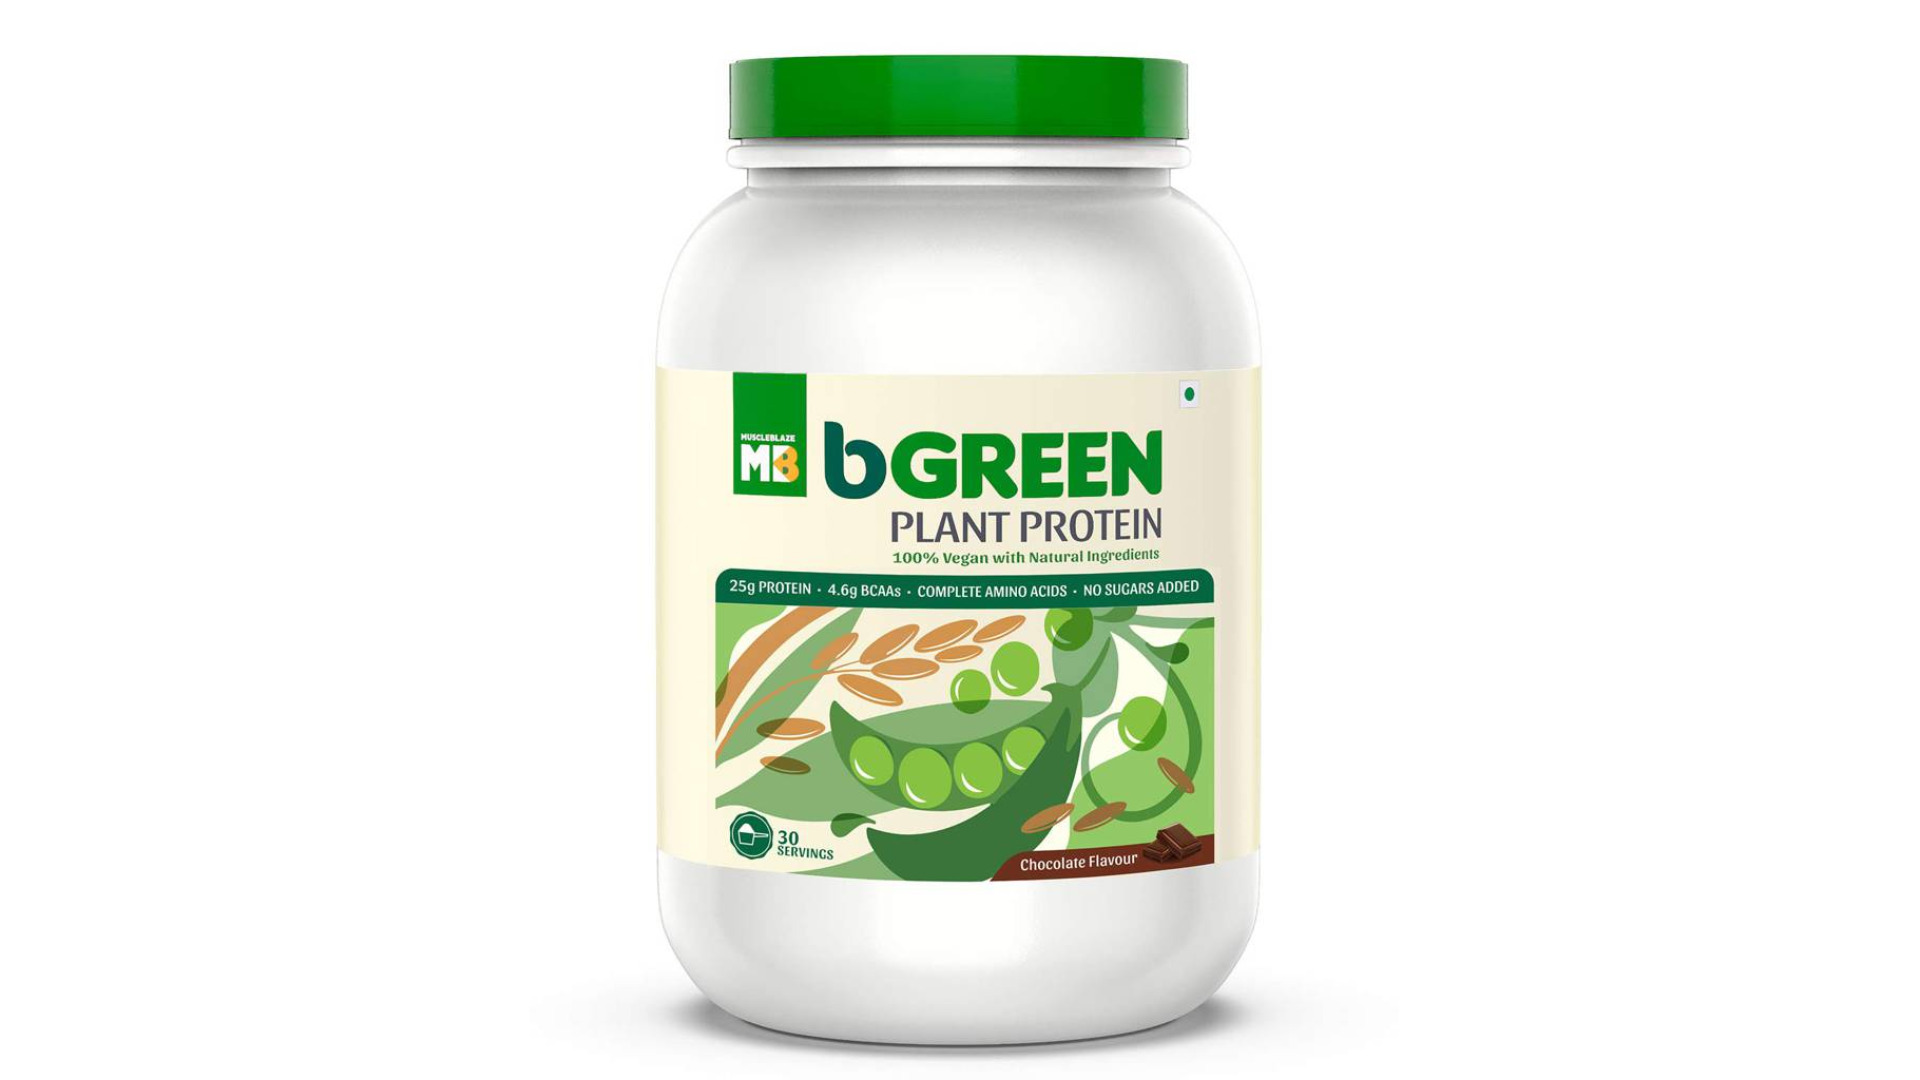 Muscleblaze bGREEN Vegan Plant protein powder